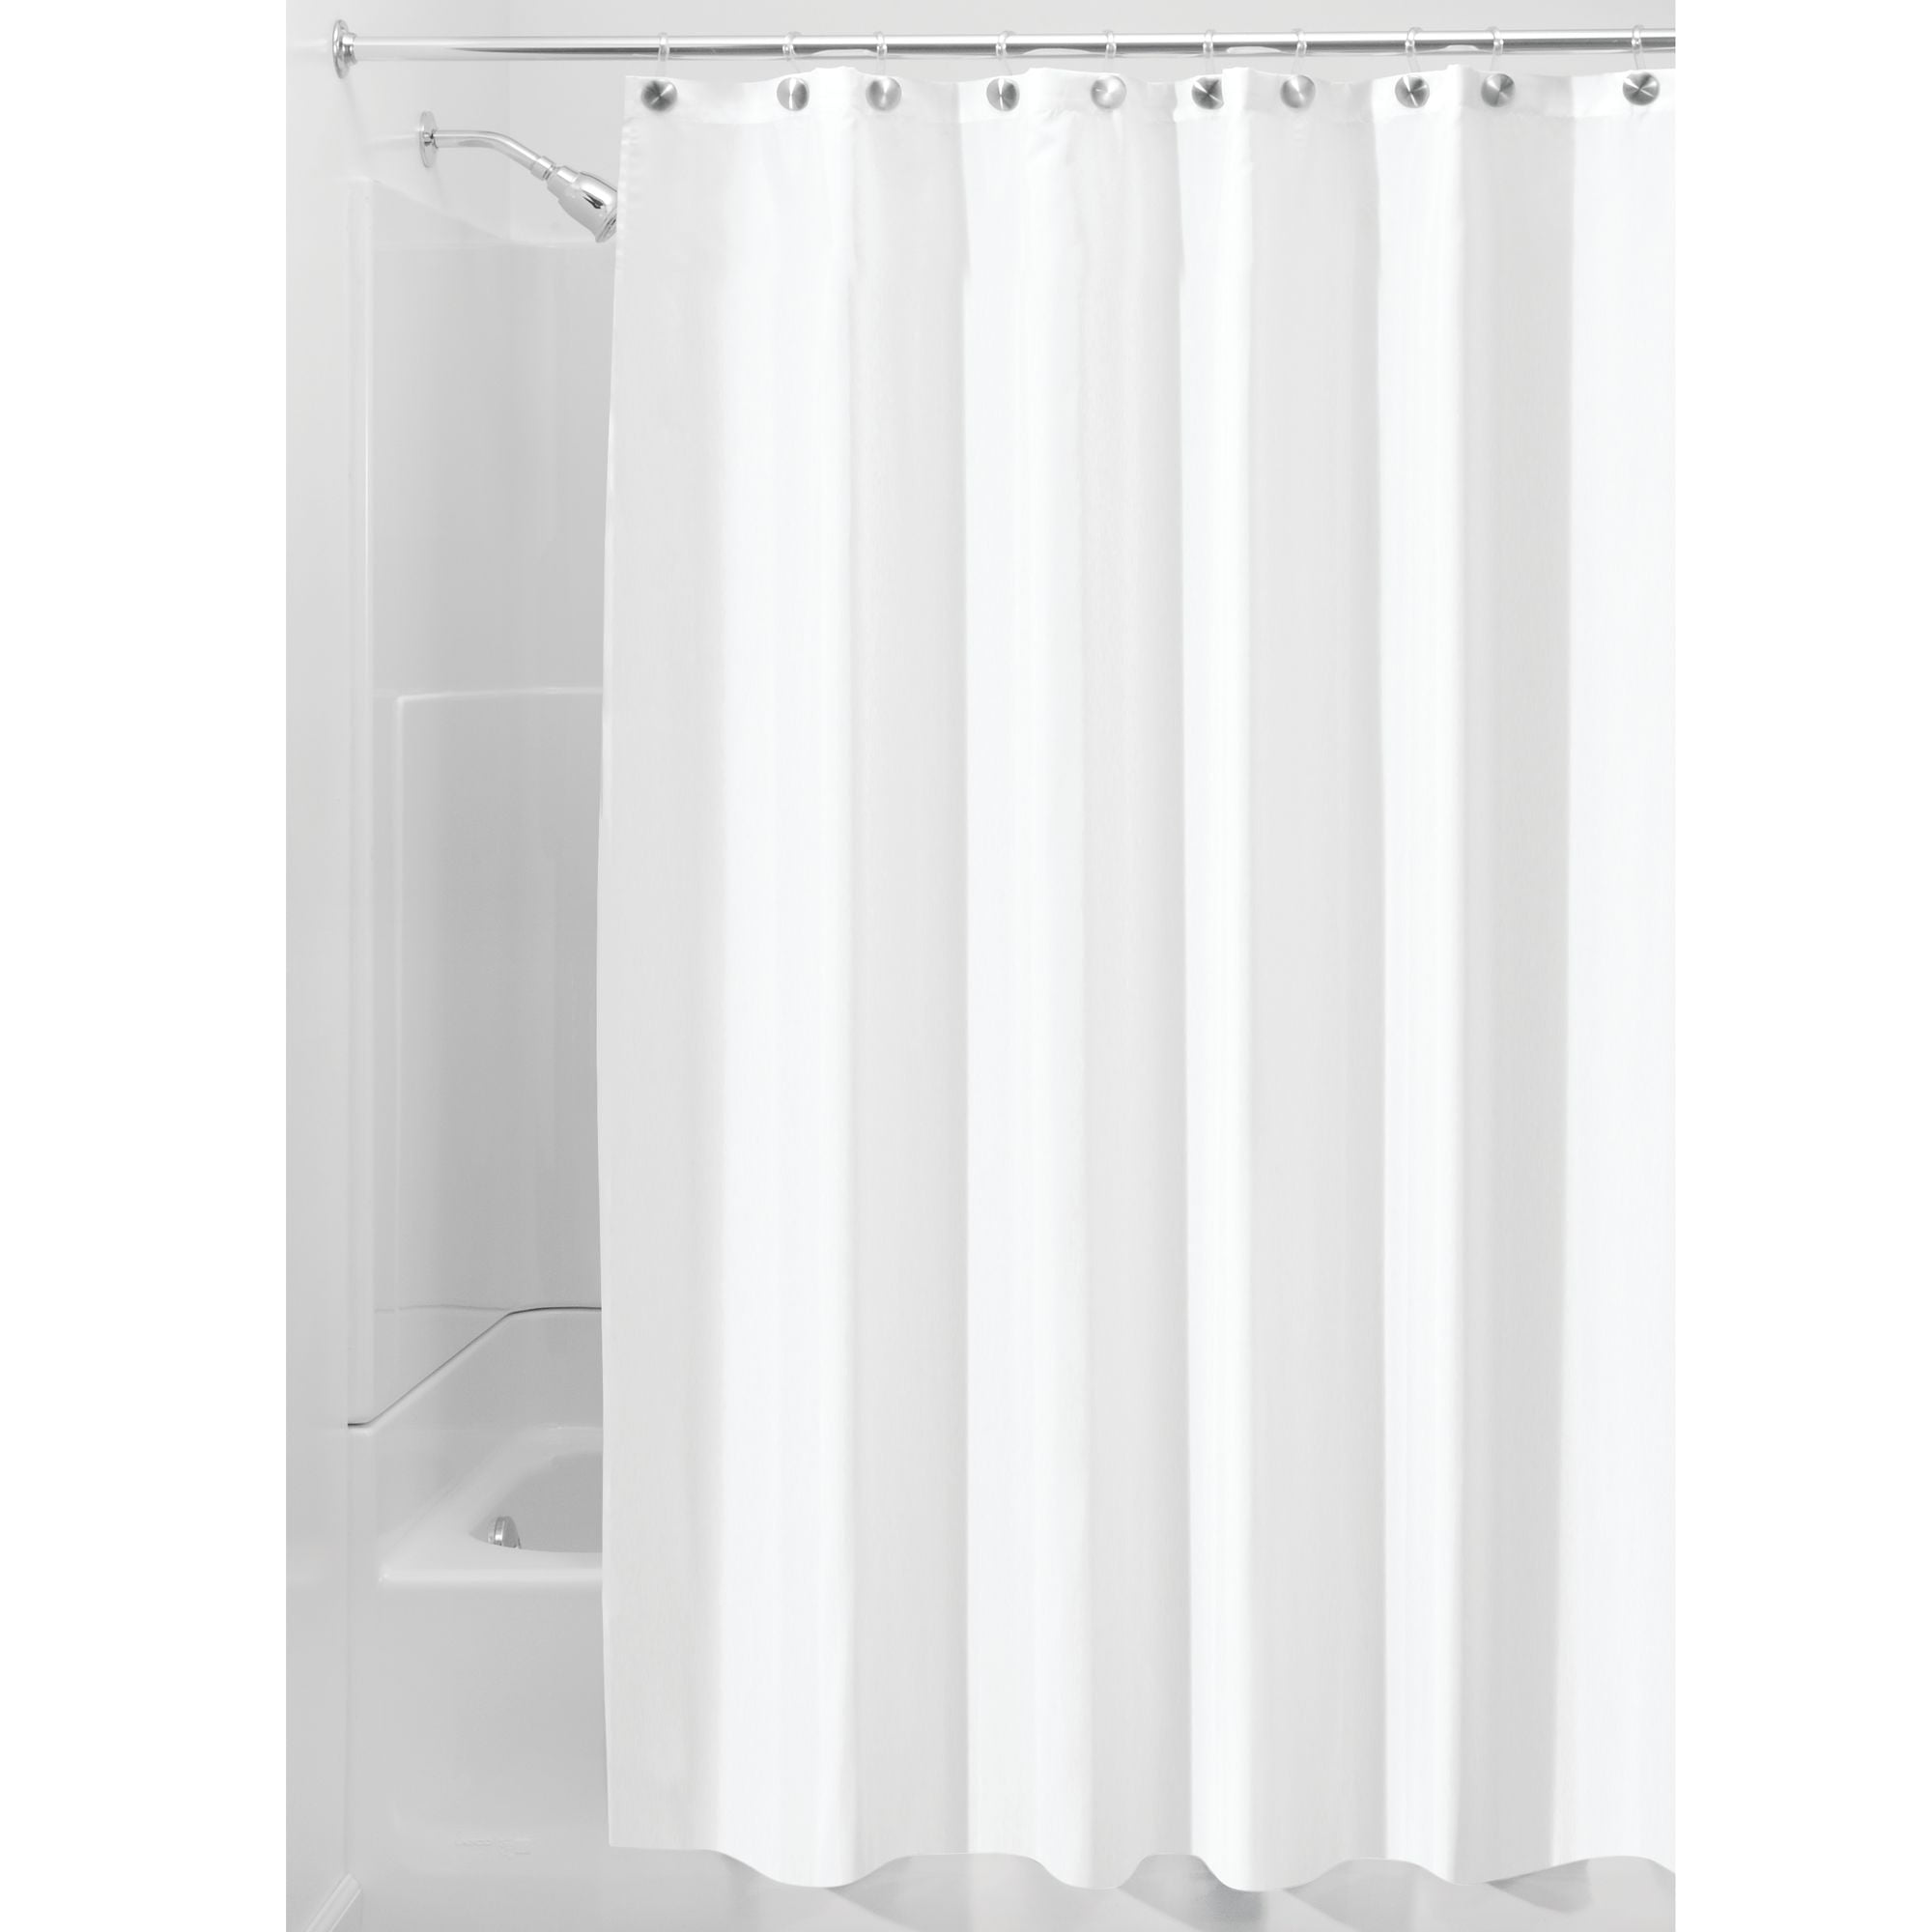 Interdesign Waterproof Fabric Shower, 108 Shower Curtain Rod